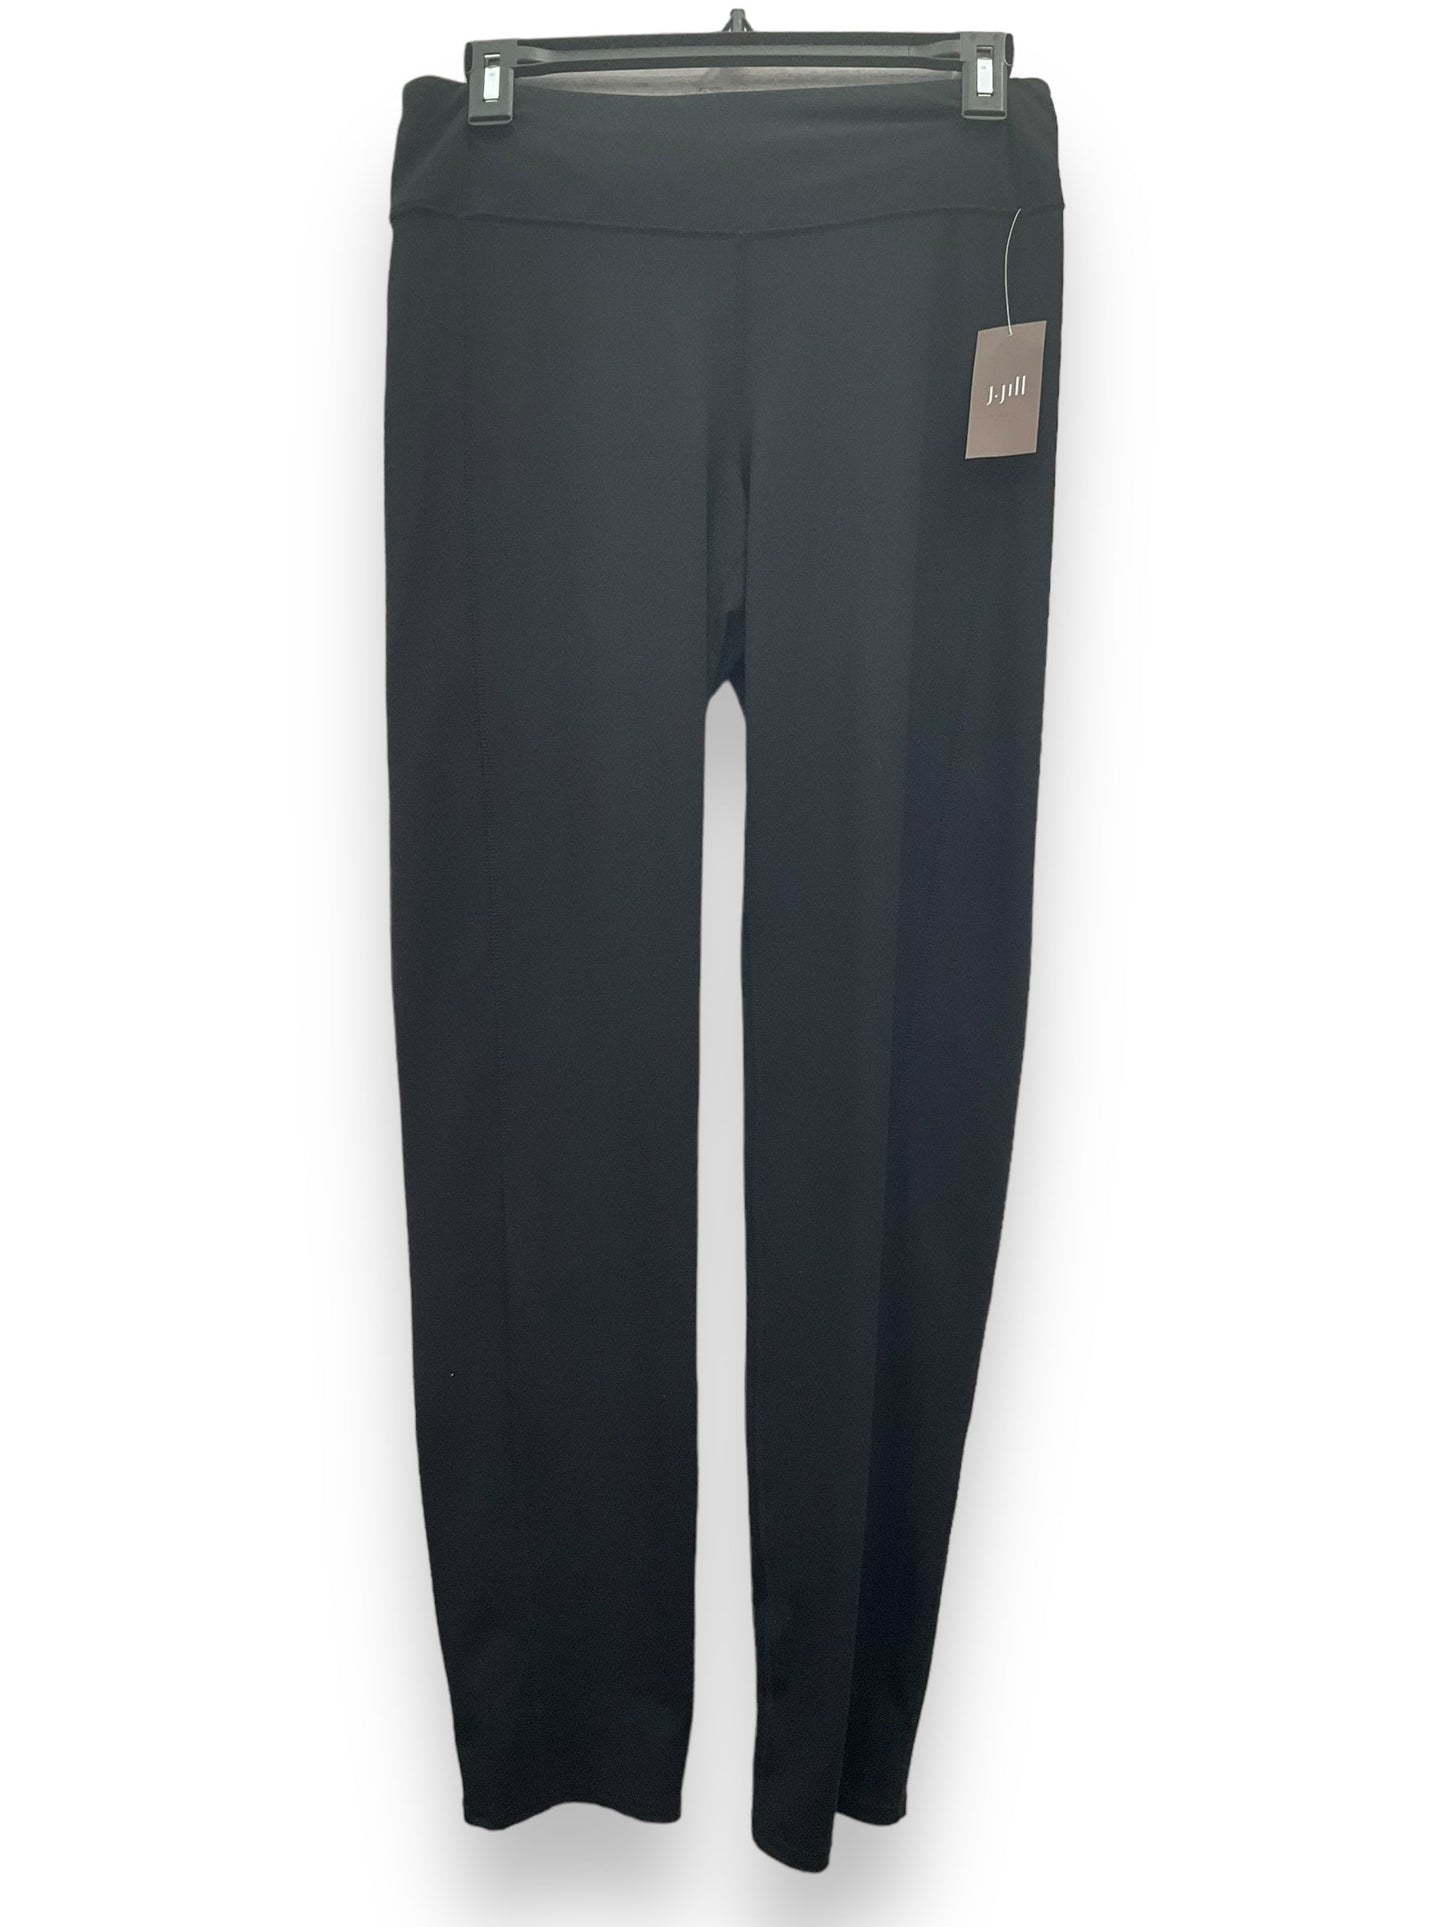 Black Athletic Pants Pure Jill, Size Xs